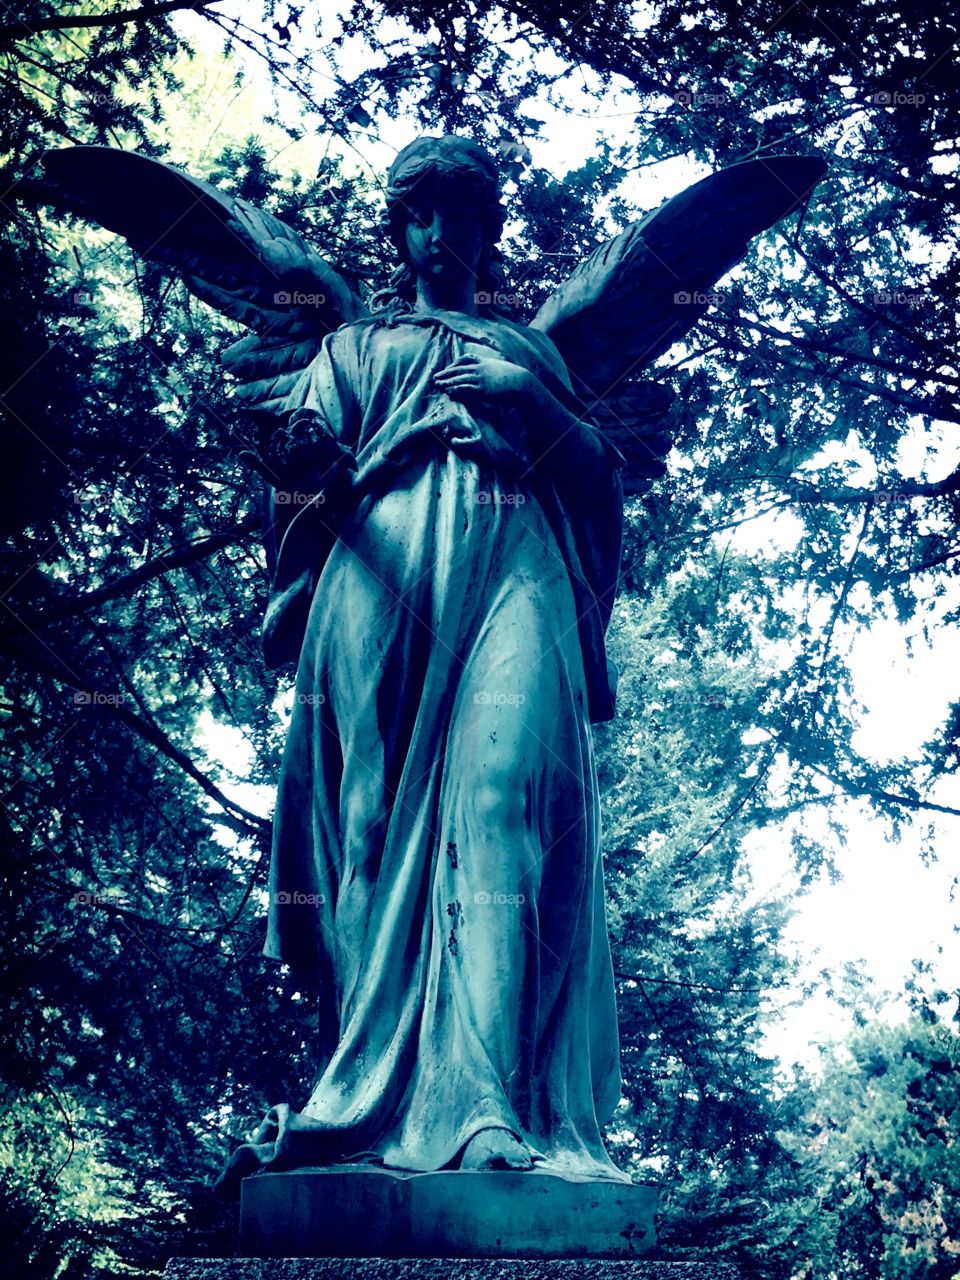 A Statue in a German cemetery - cologne melattenfriedhof 